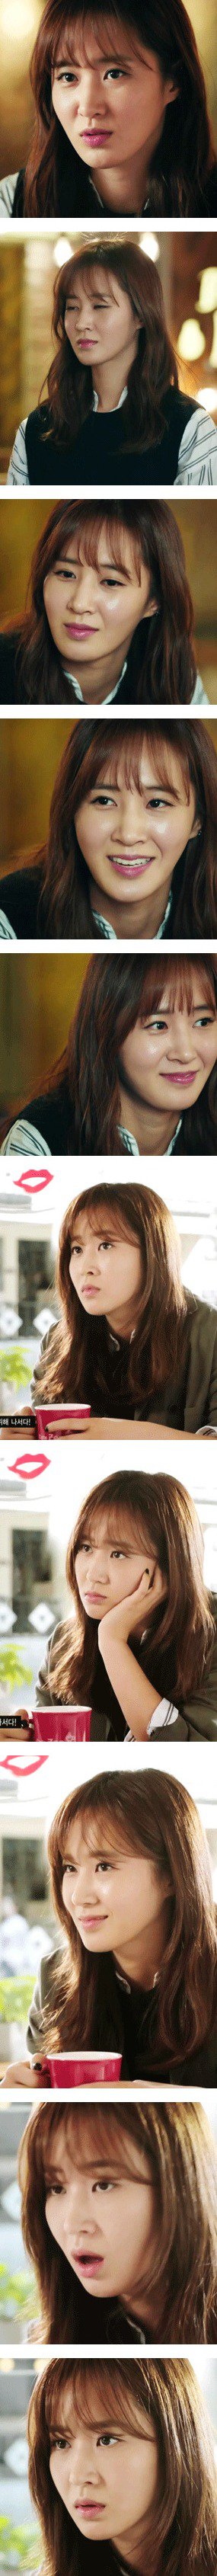 episodes 1 and 2 captures for the Korean drama 'Neighborhood Hero'